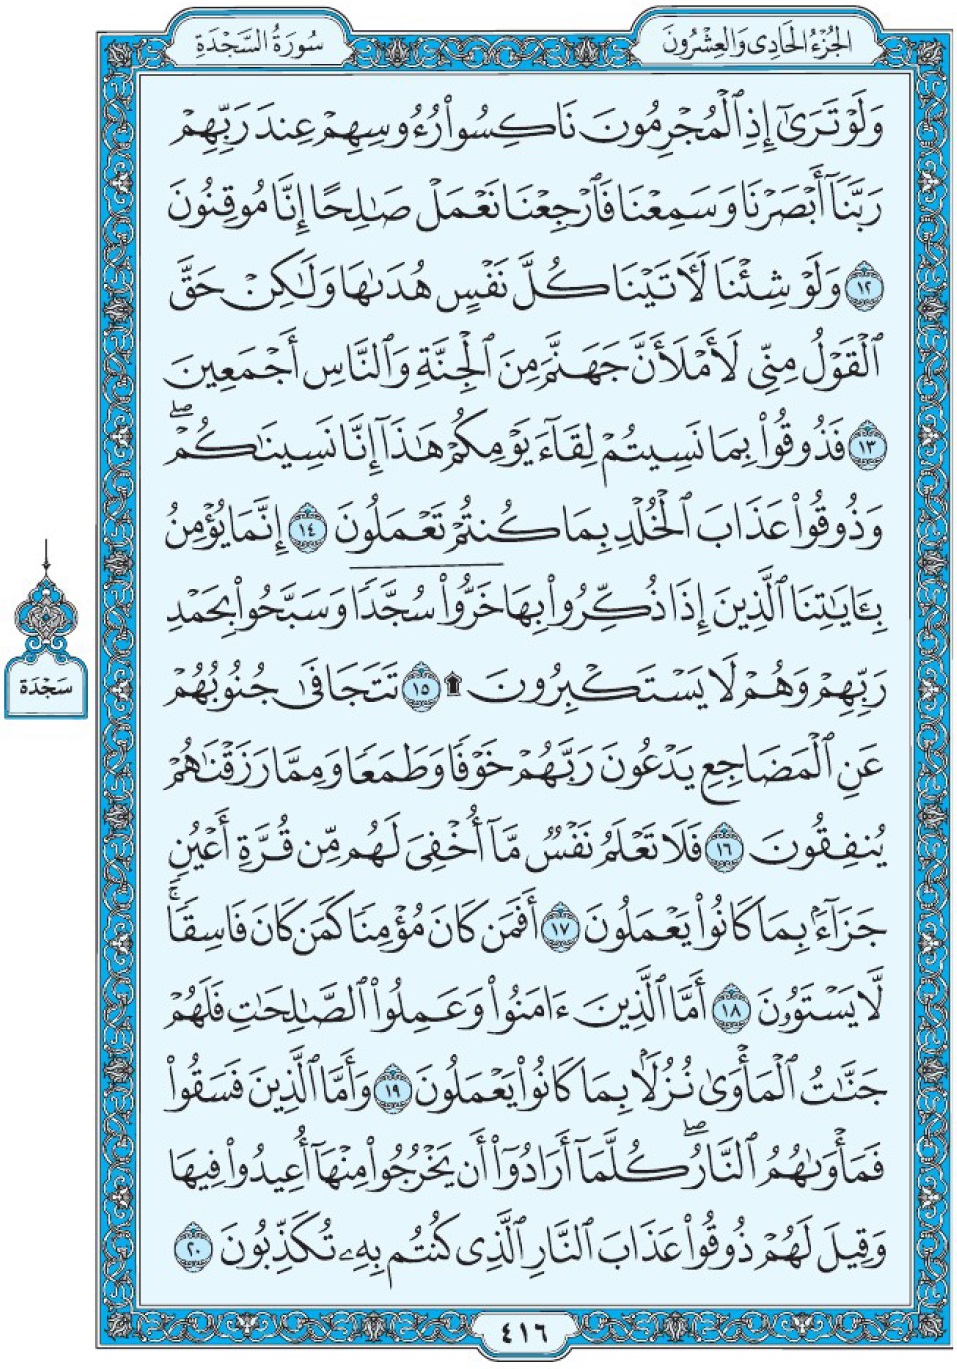 Коран Мединский мусхаф страница 416, Ас-Саджда, аят 12-20